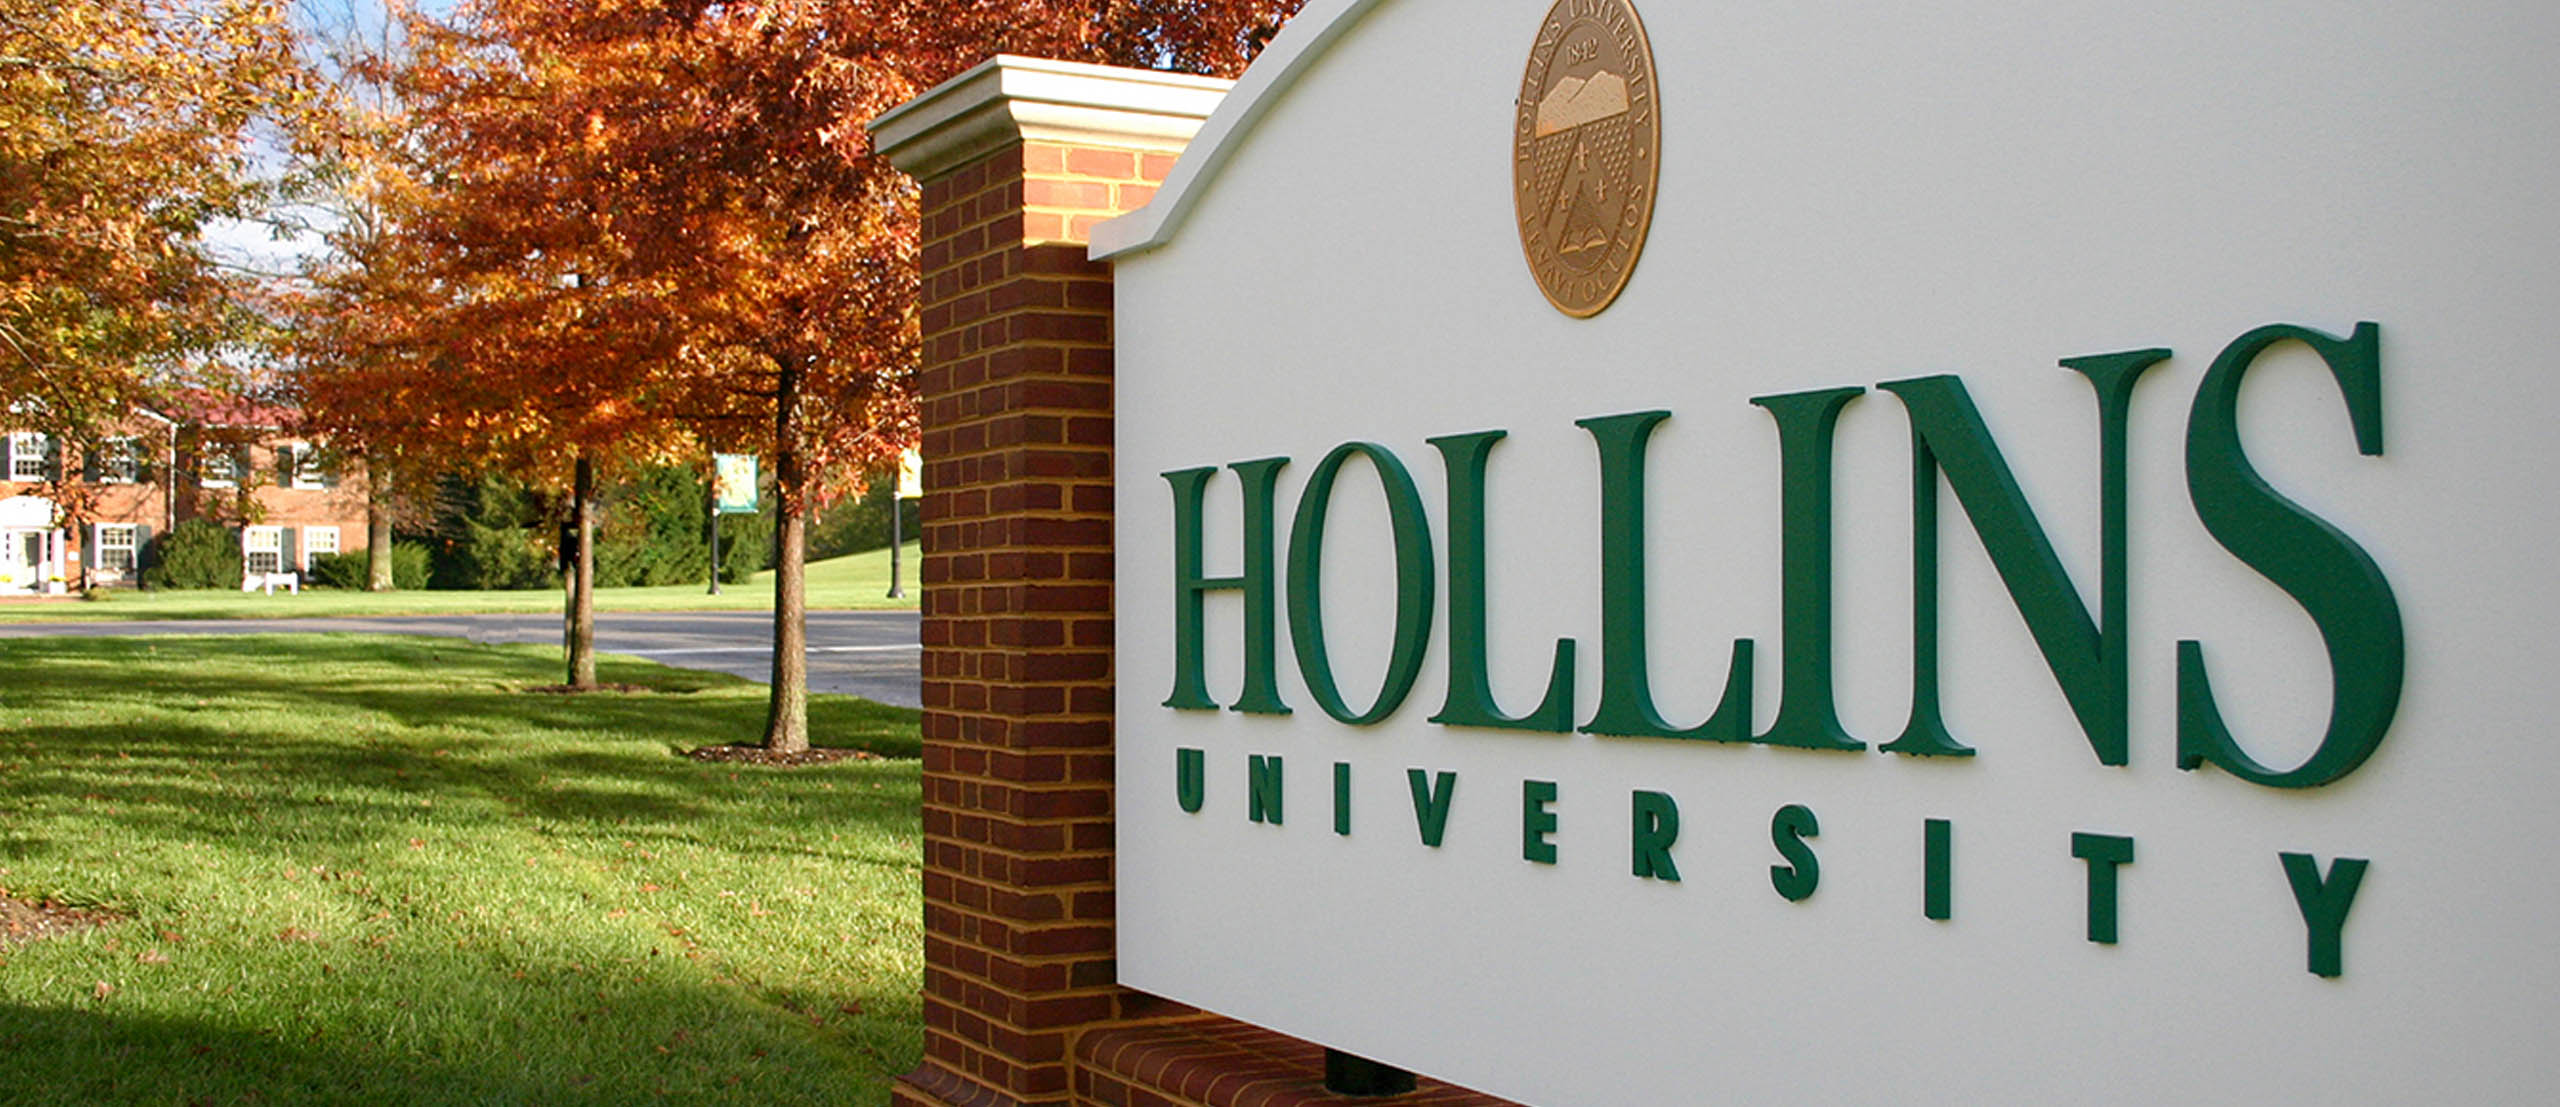 Hollins University